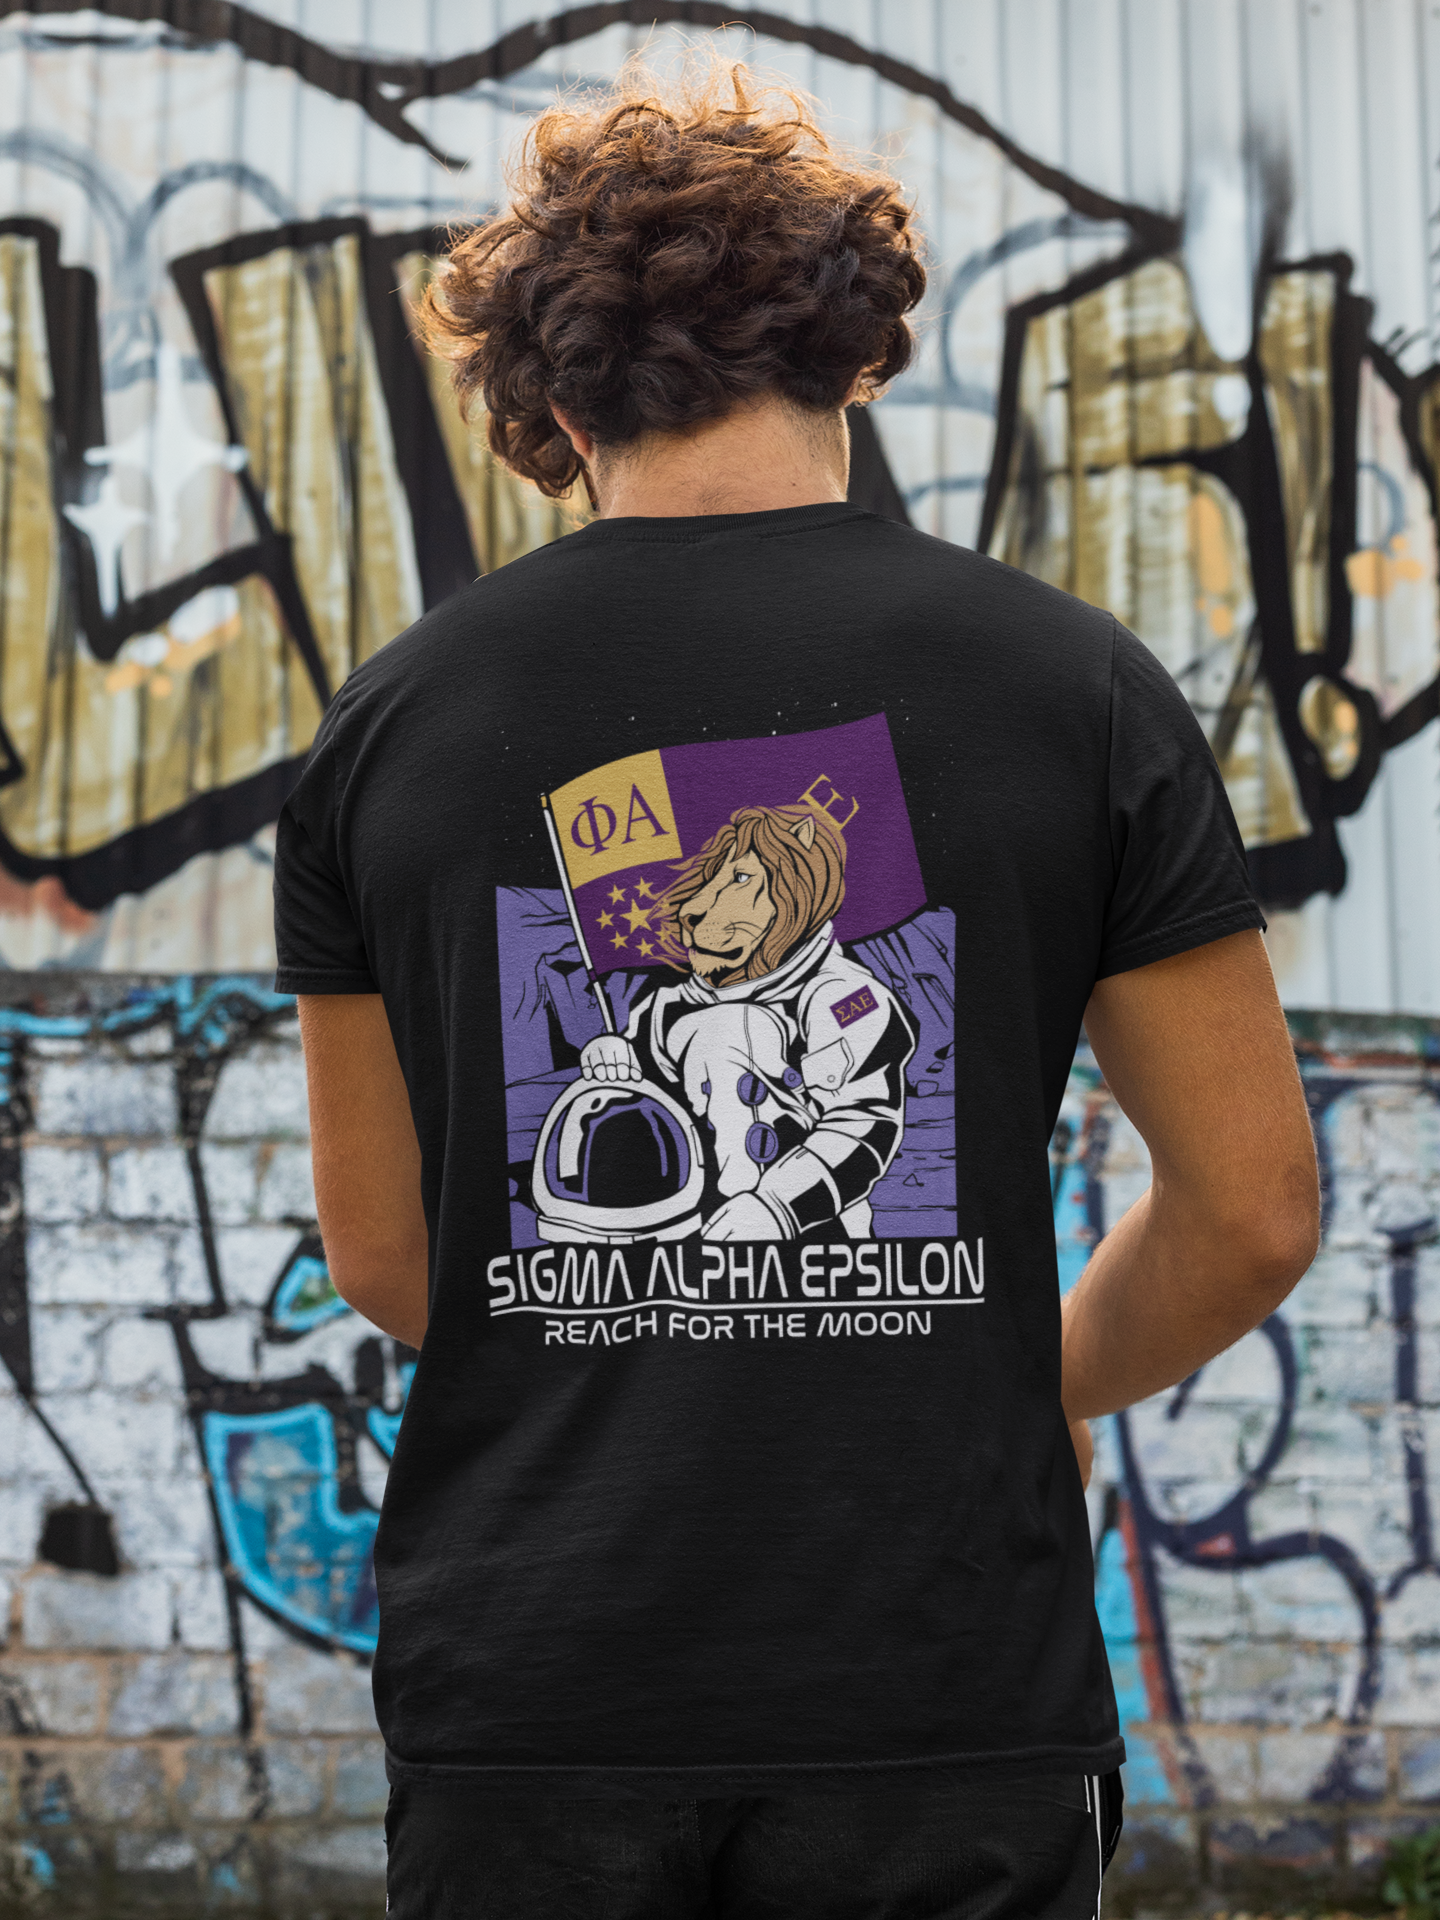 Sigma Alpha Epsilon | Space Lion Graphic T-Shirt | Sigma Alpha Epsilon Clothing and Merchandise model 